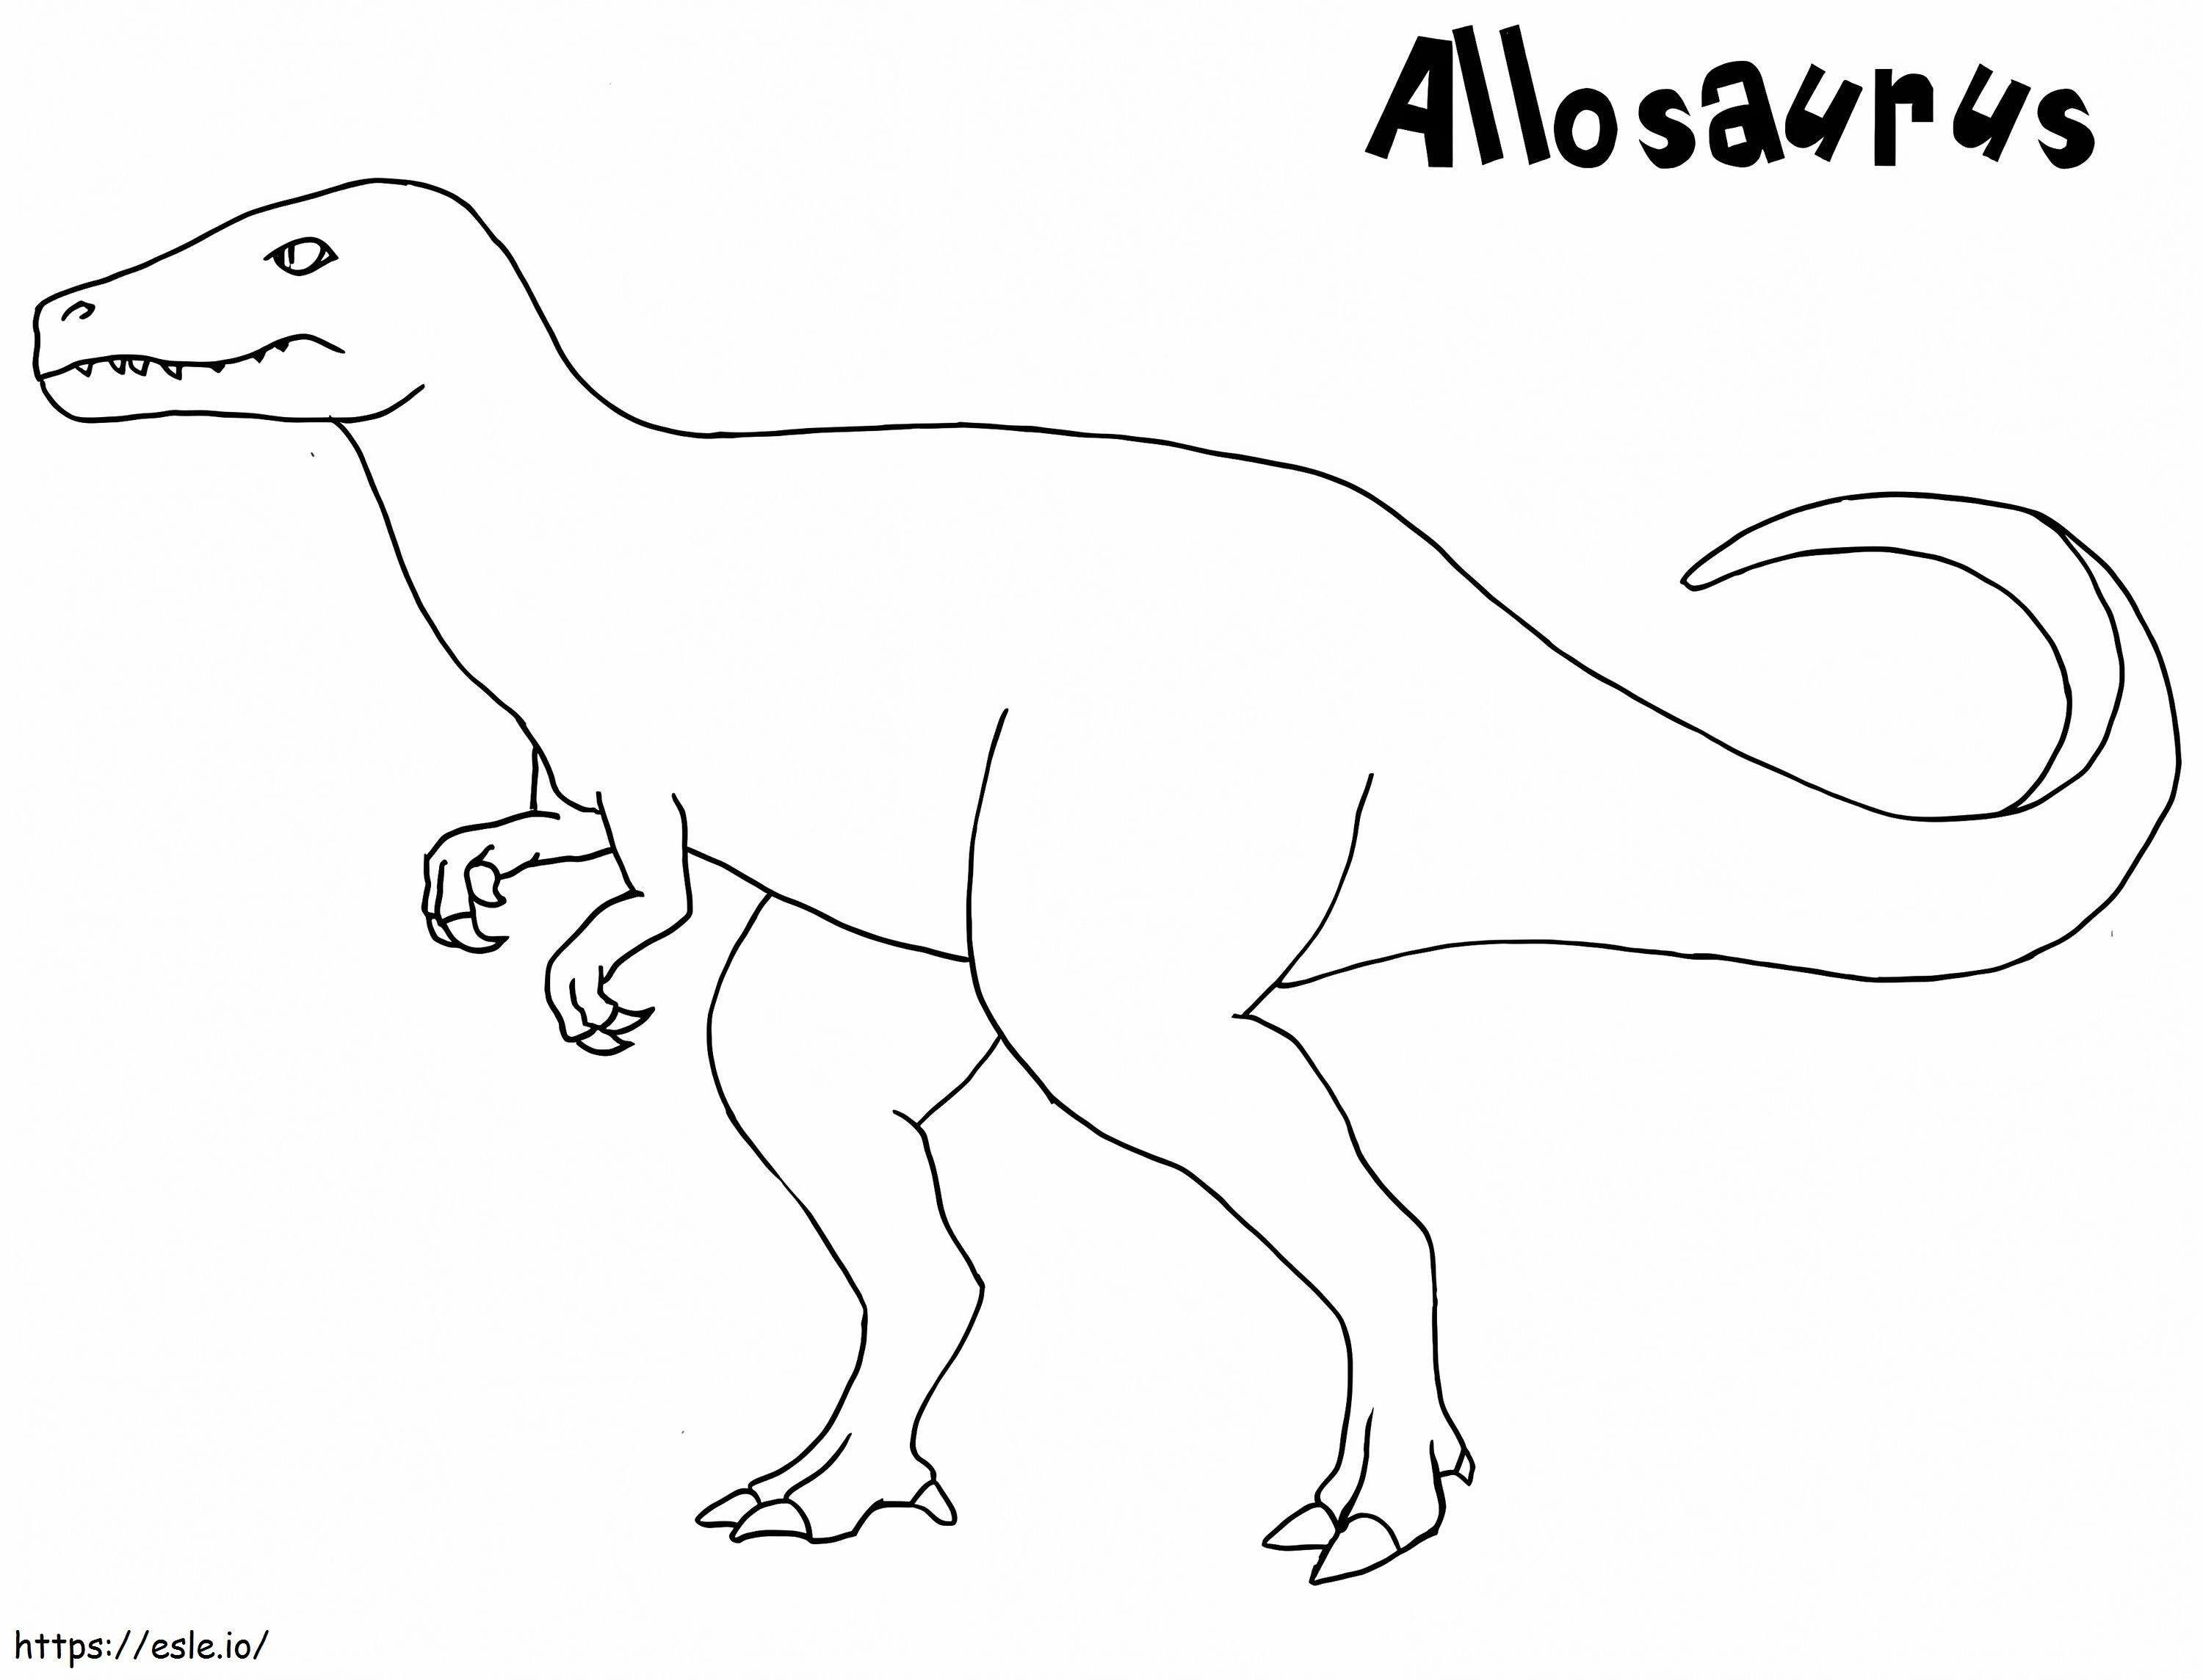 Alosaurio simple para colorear